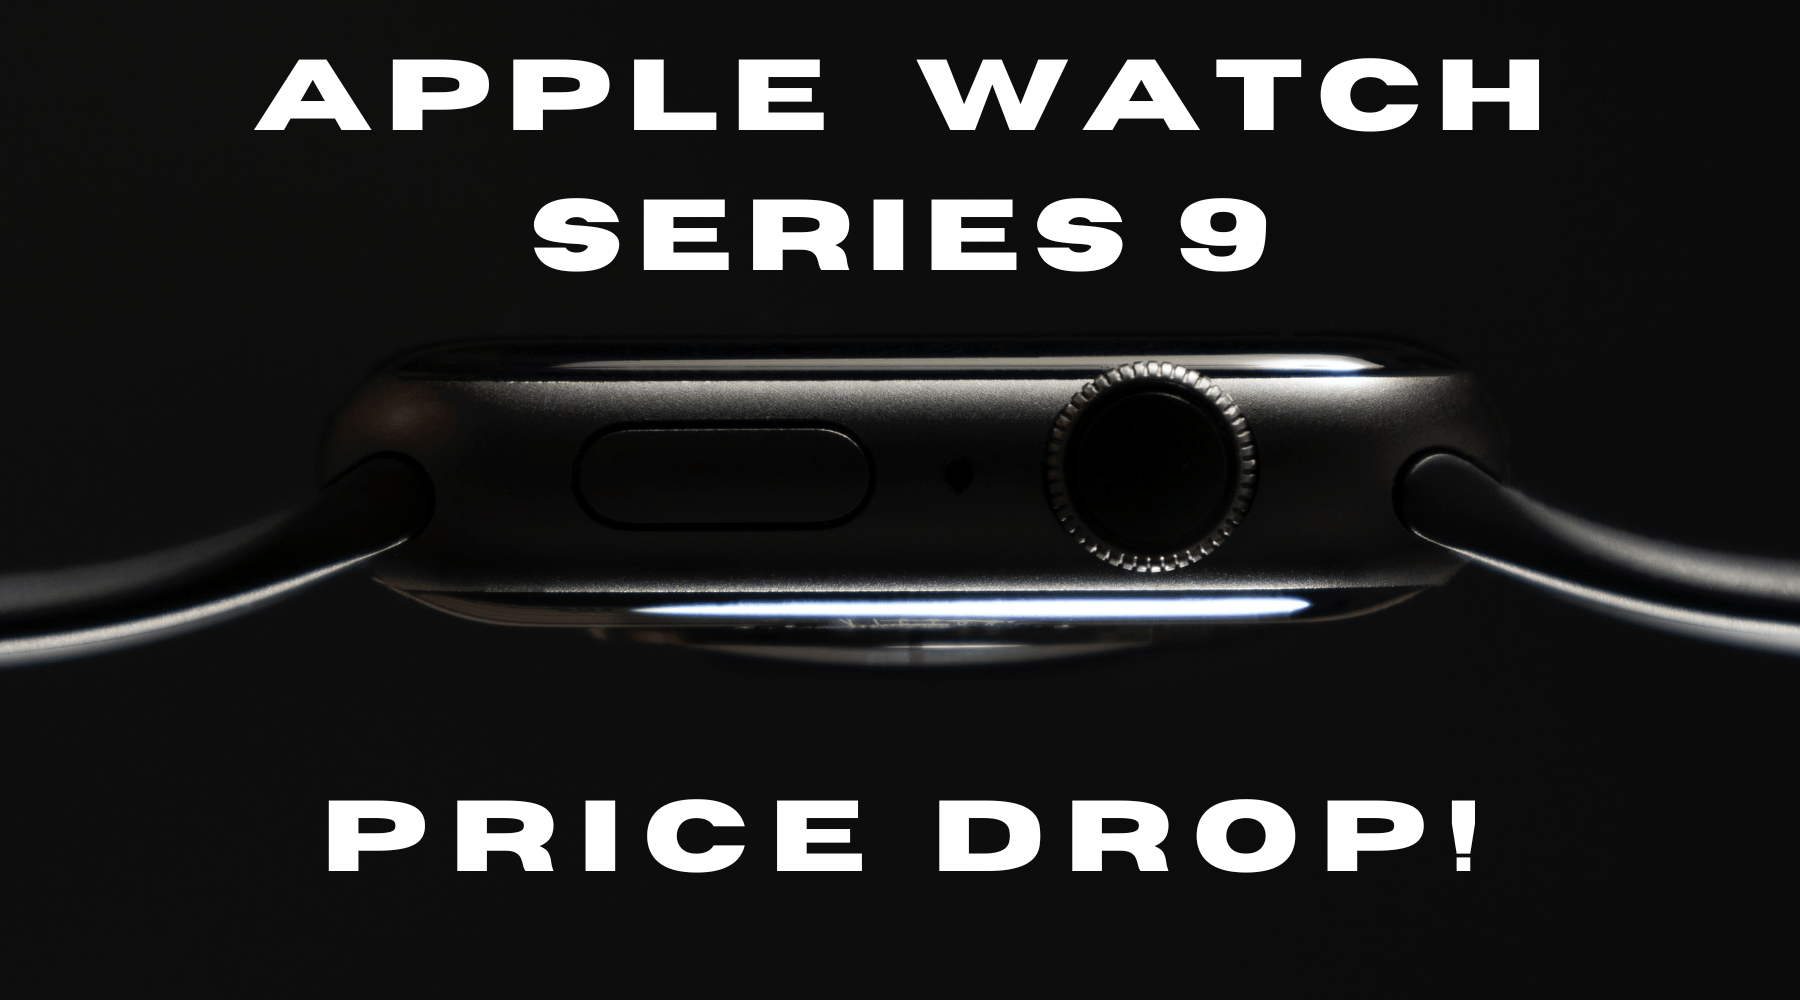 Apple Watch Series 9 Savings! - Buckle and Band